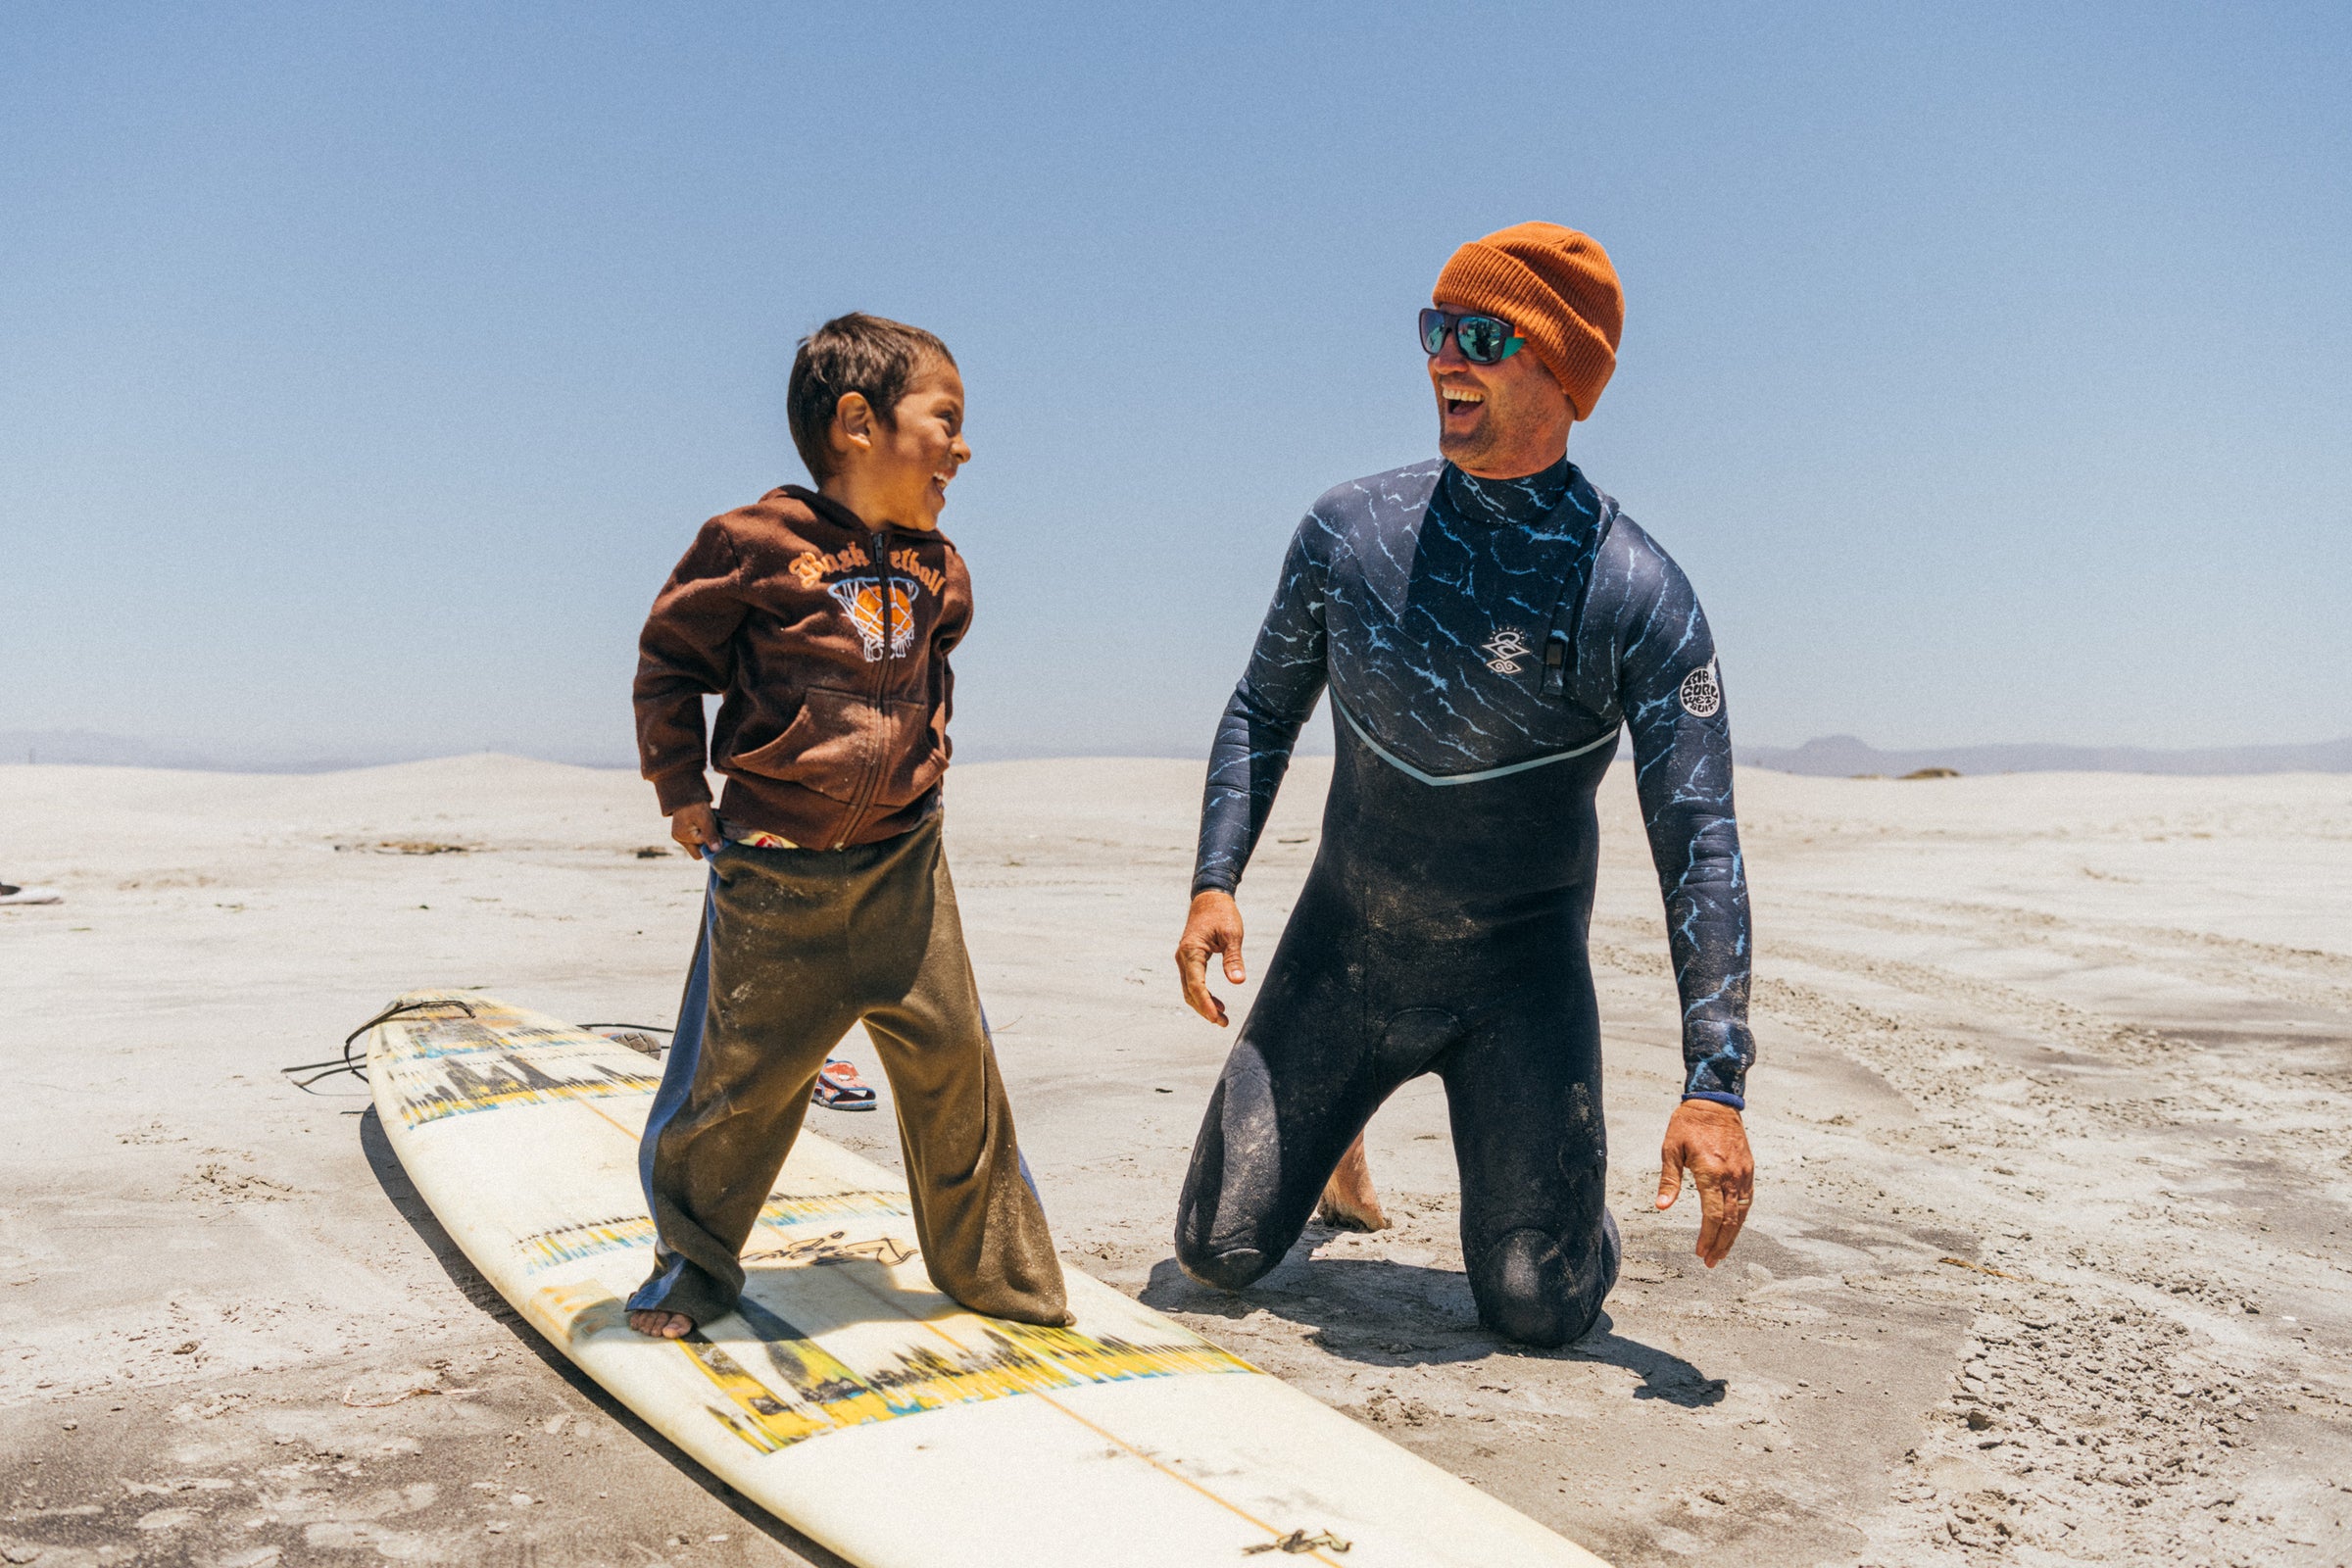 CJ Hobgood teaching a boy to surf